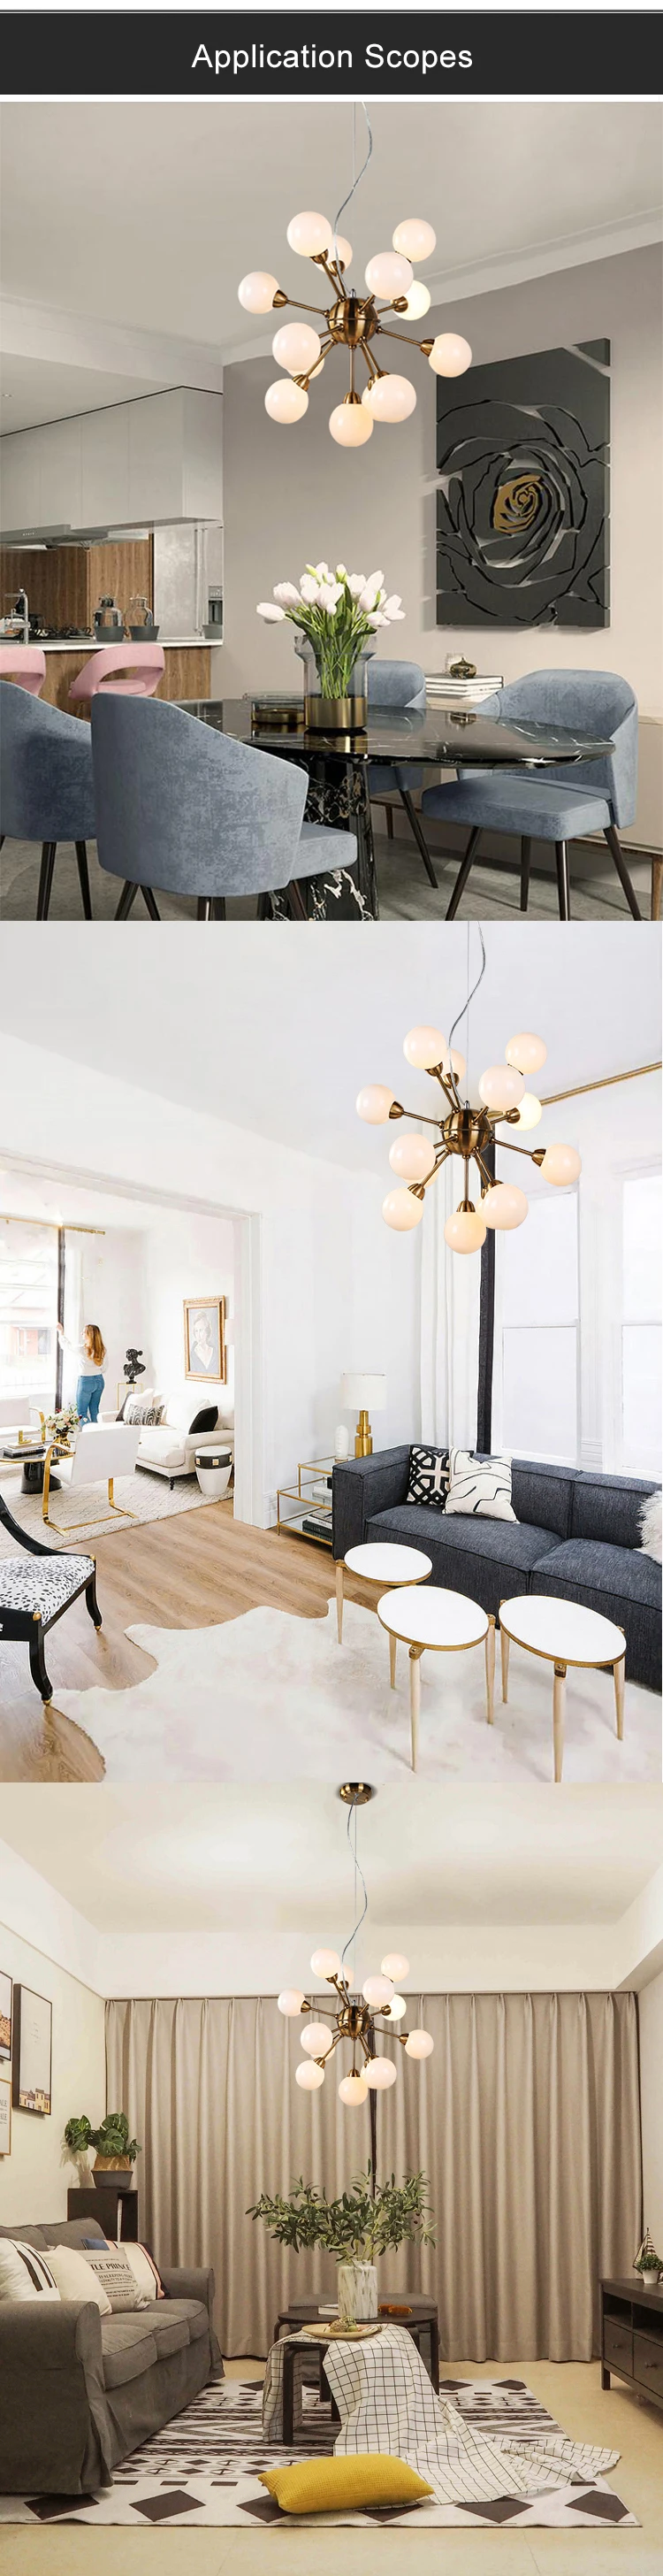 Best Modern Design White glass Shade Pendant Light Fixtures For Kitchen And Living Room